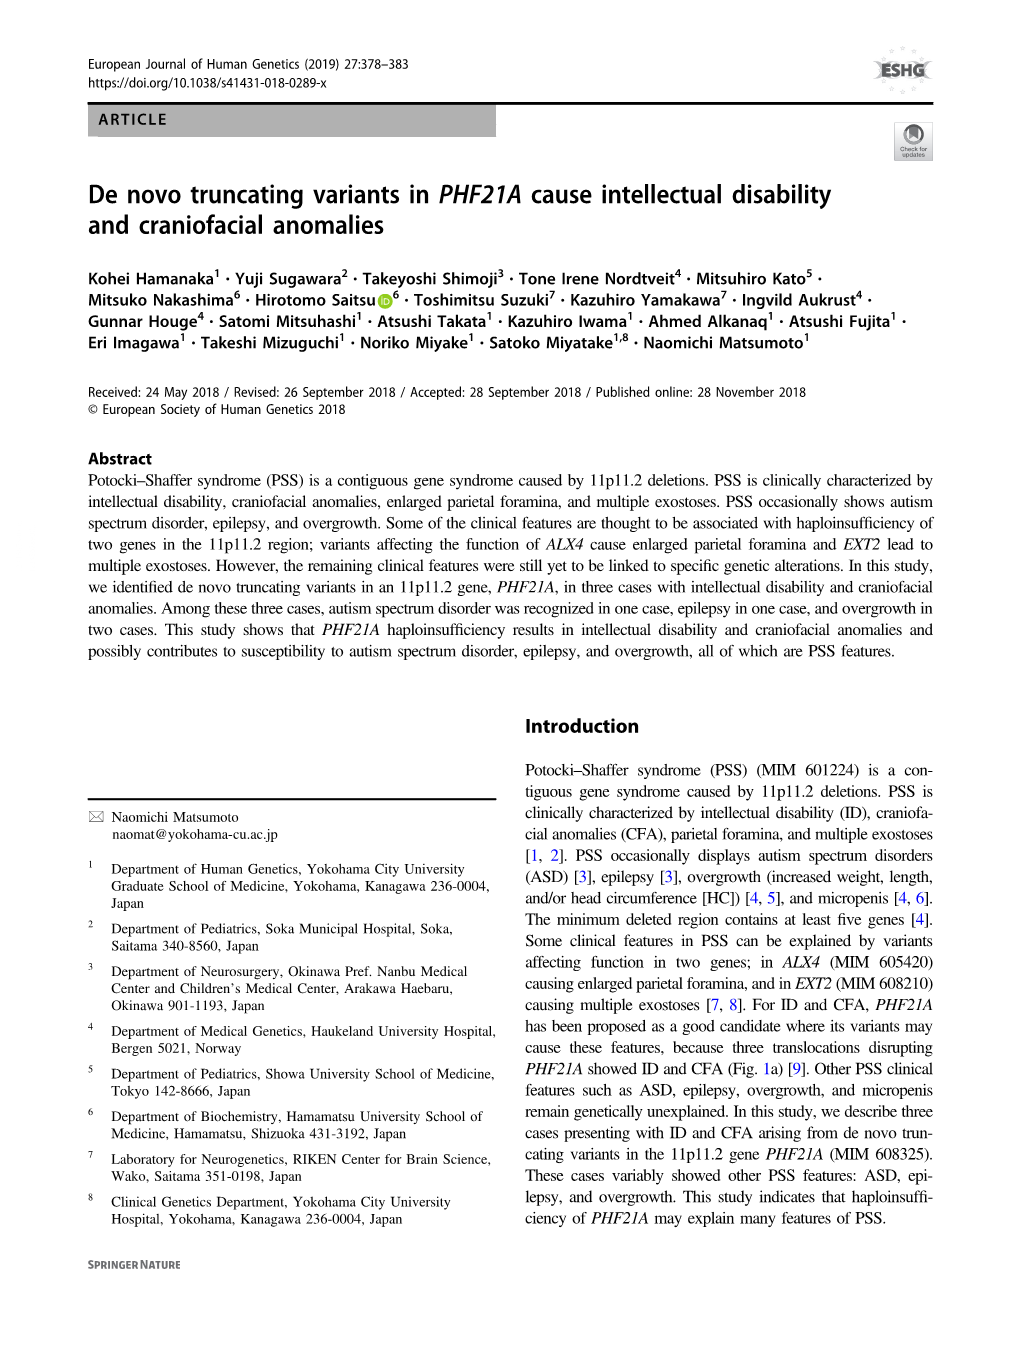 De Novo Truncating Variants in PHF21A Cause Intellectual Disability and Craniofacial Anomalies